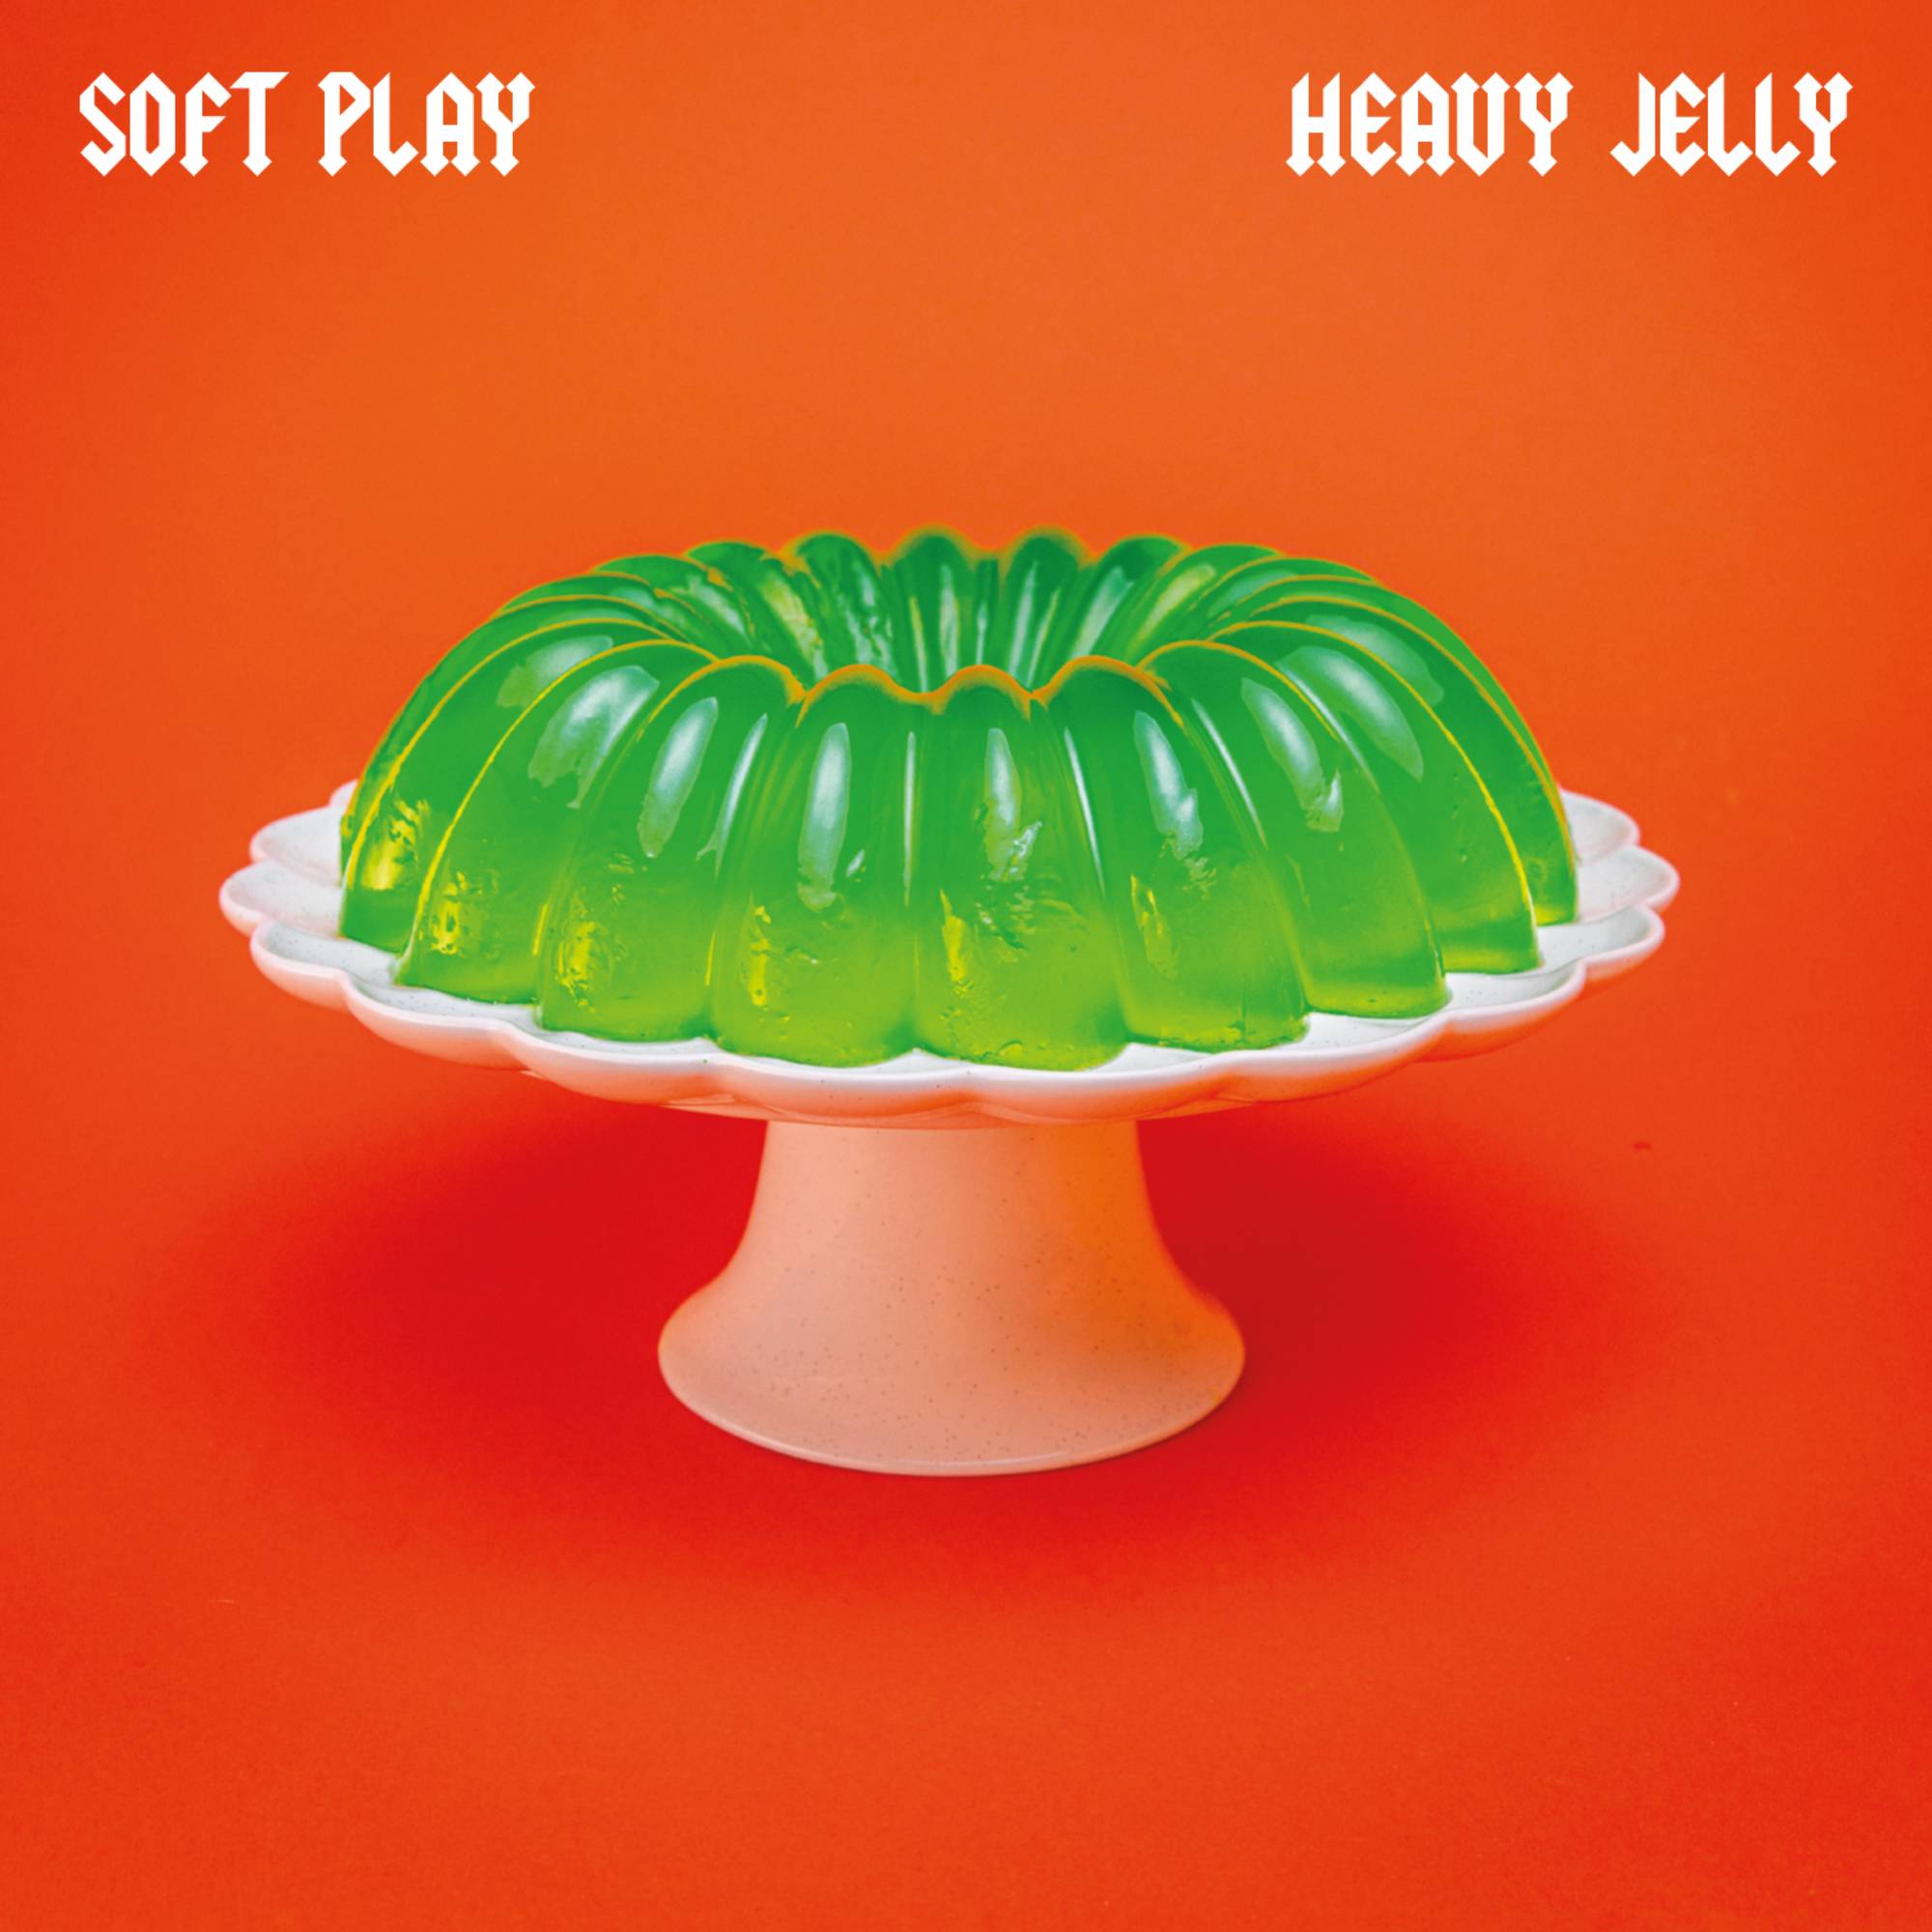 SoftPlay 'Heavy Jelly' album artwork. Credit: PRESS